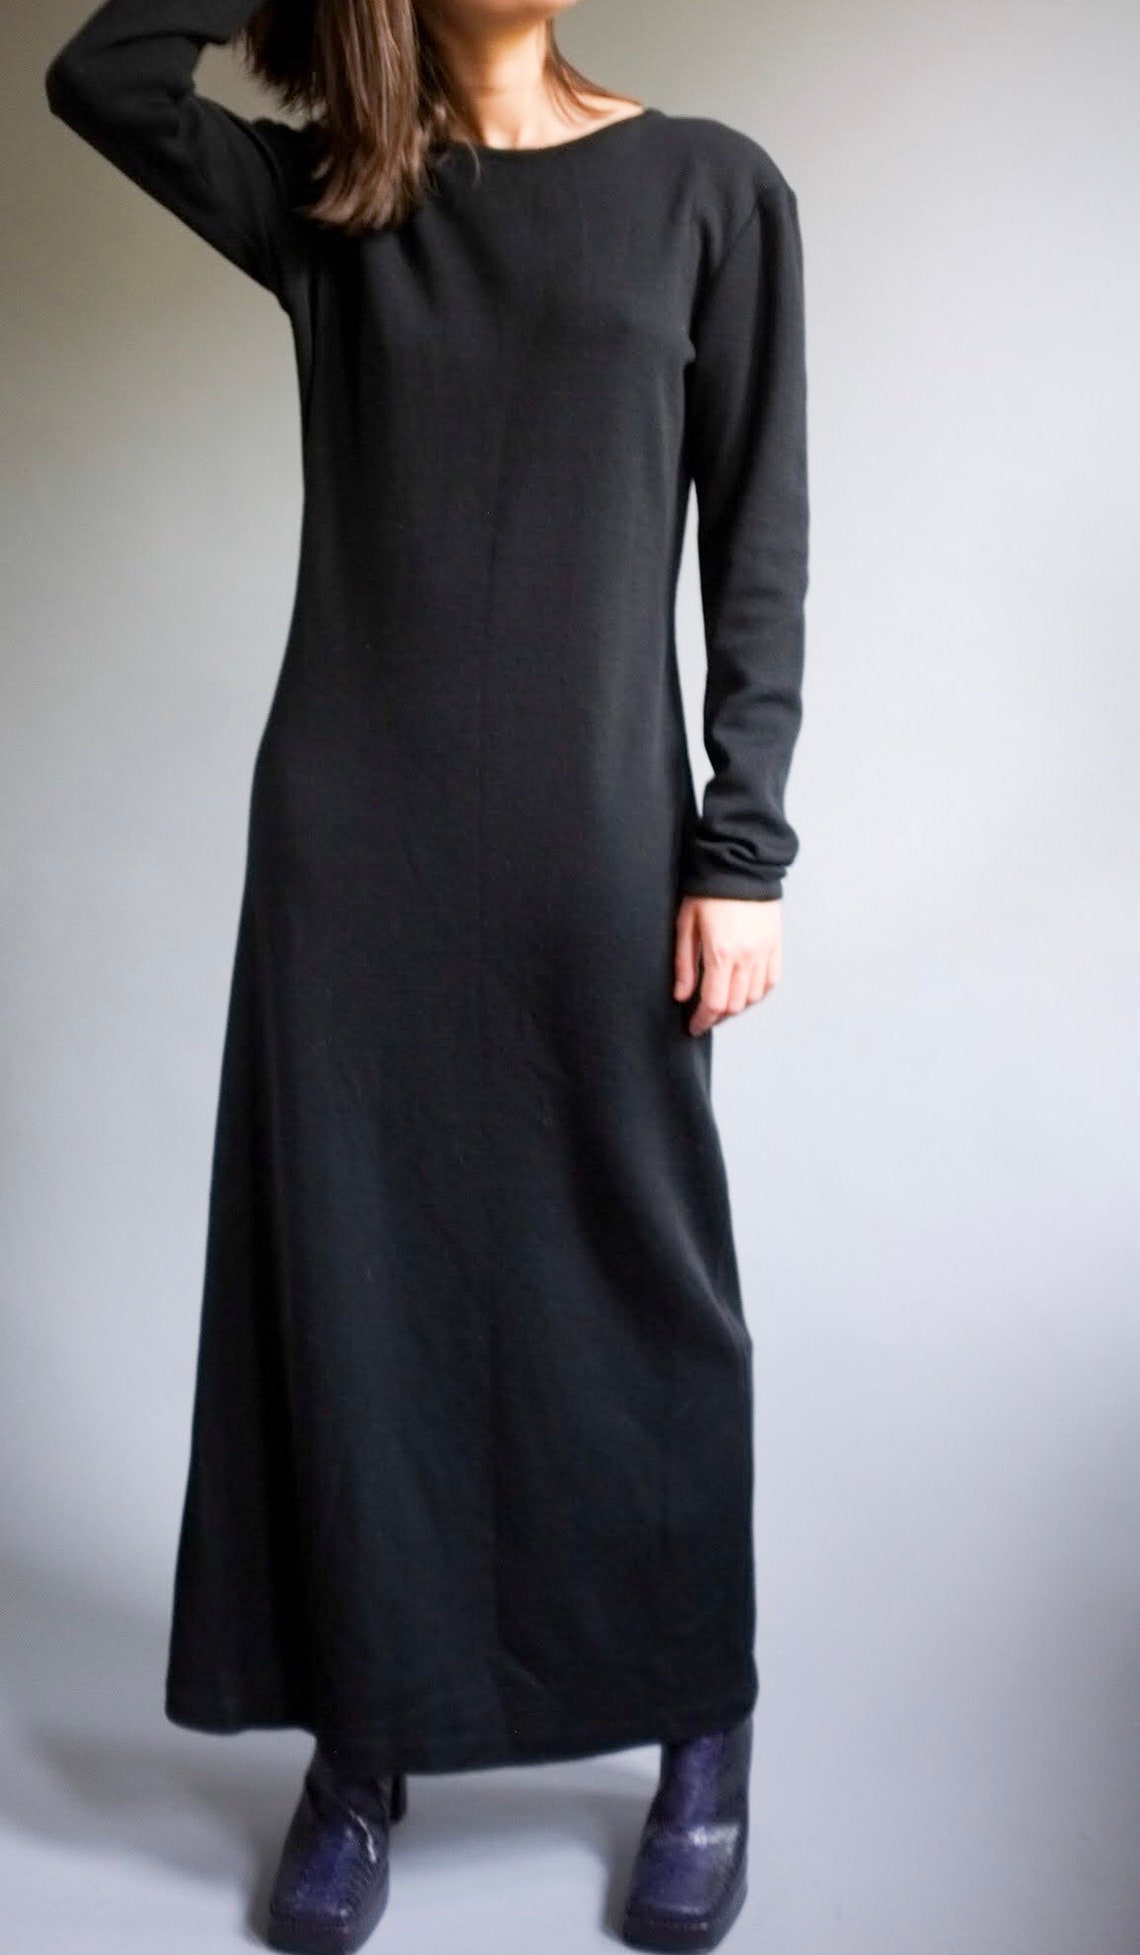 Black wool maxi dress Long wool knit dress | Etsy